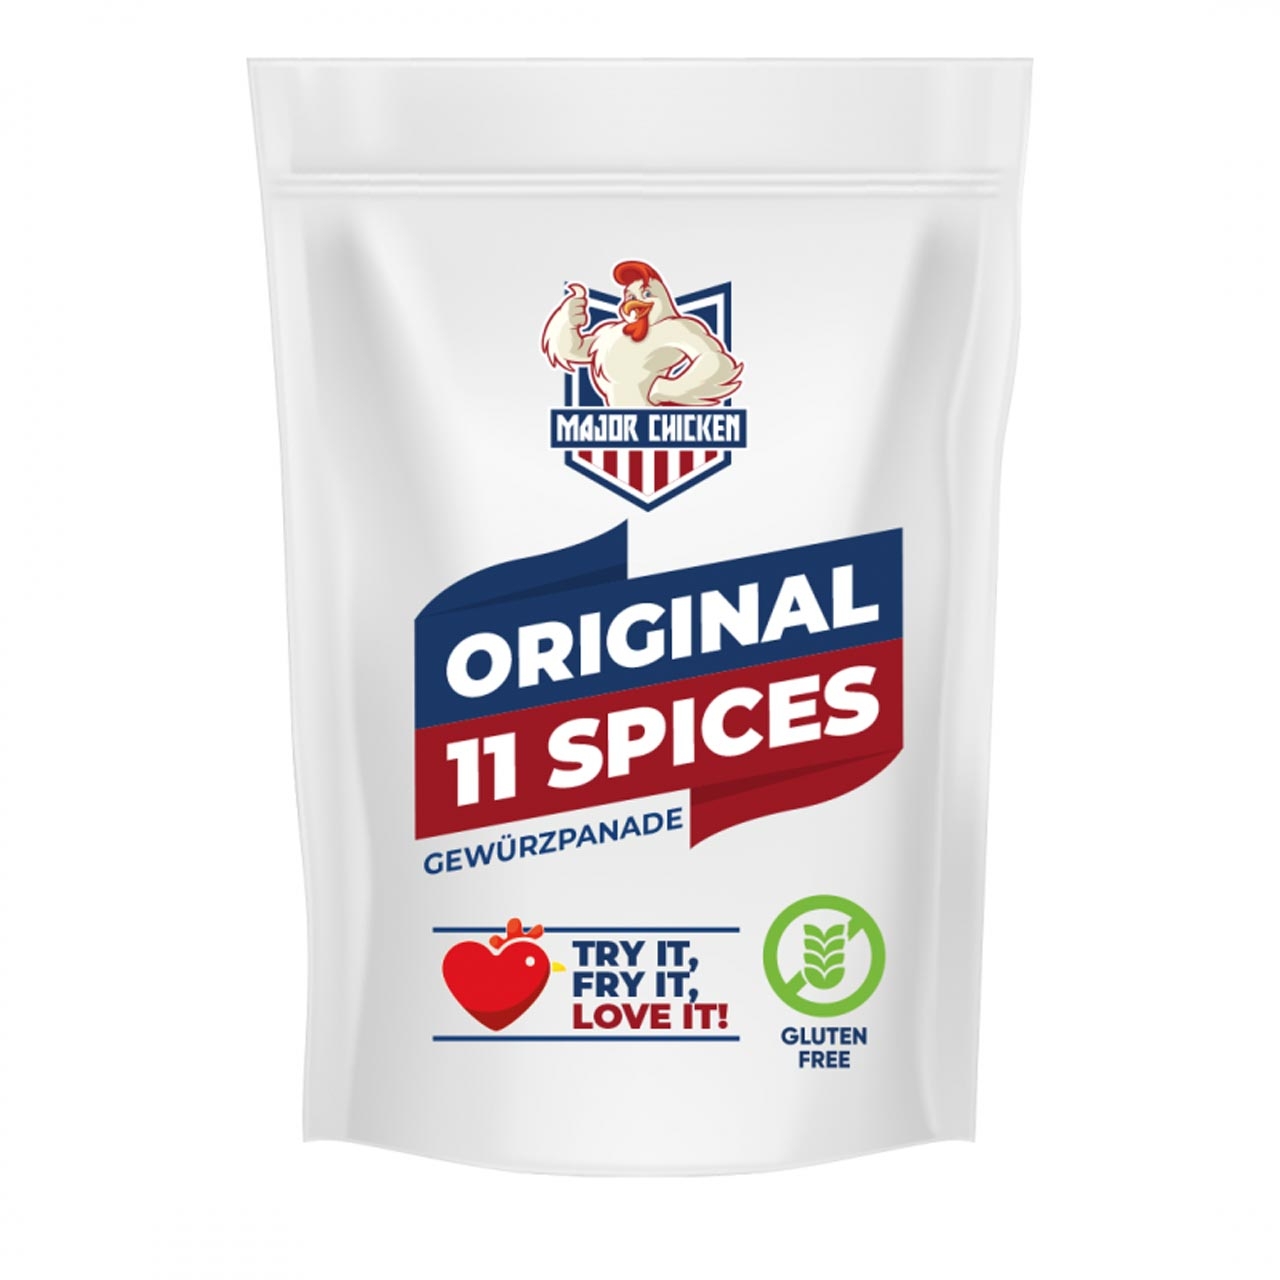 Royal Spice Major-Chicken "Original 11 Spices", 500 g500